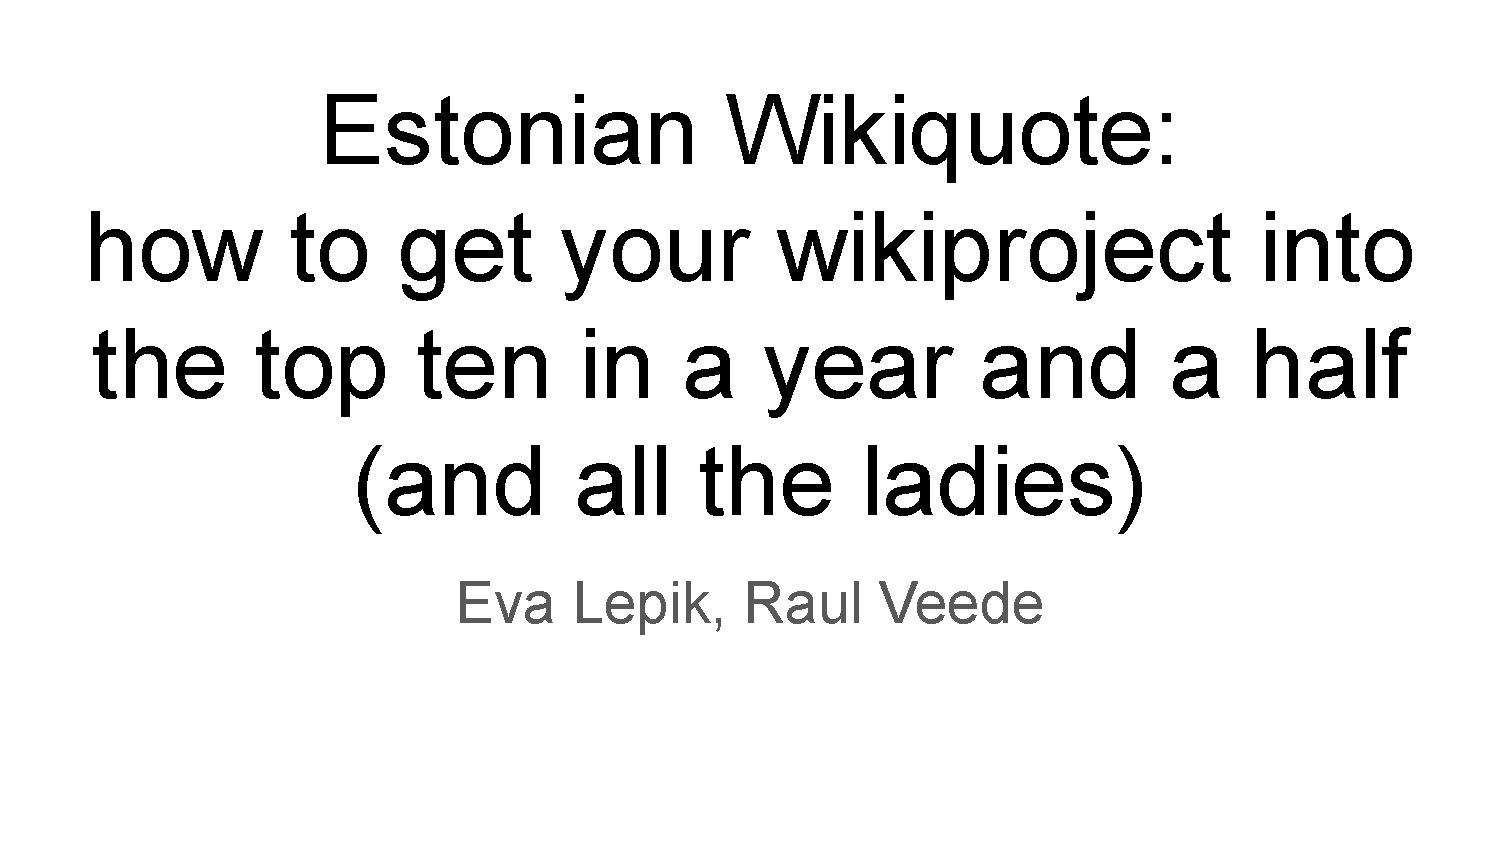 Estonian Wikiquote presentation for the CEE hullabaloo, 7 Nov 2021